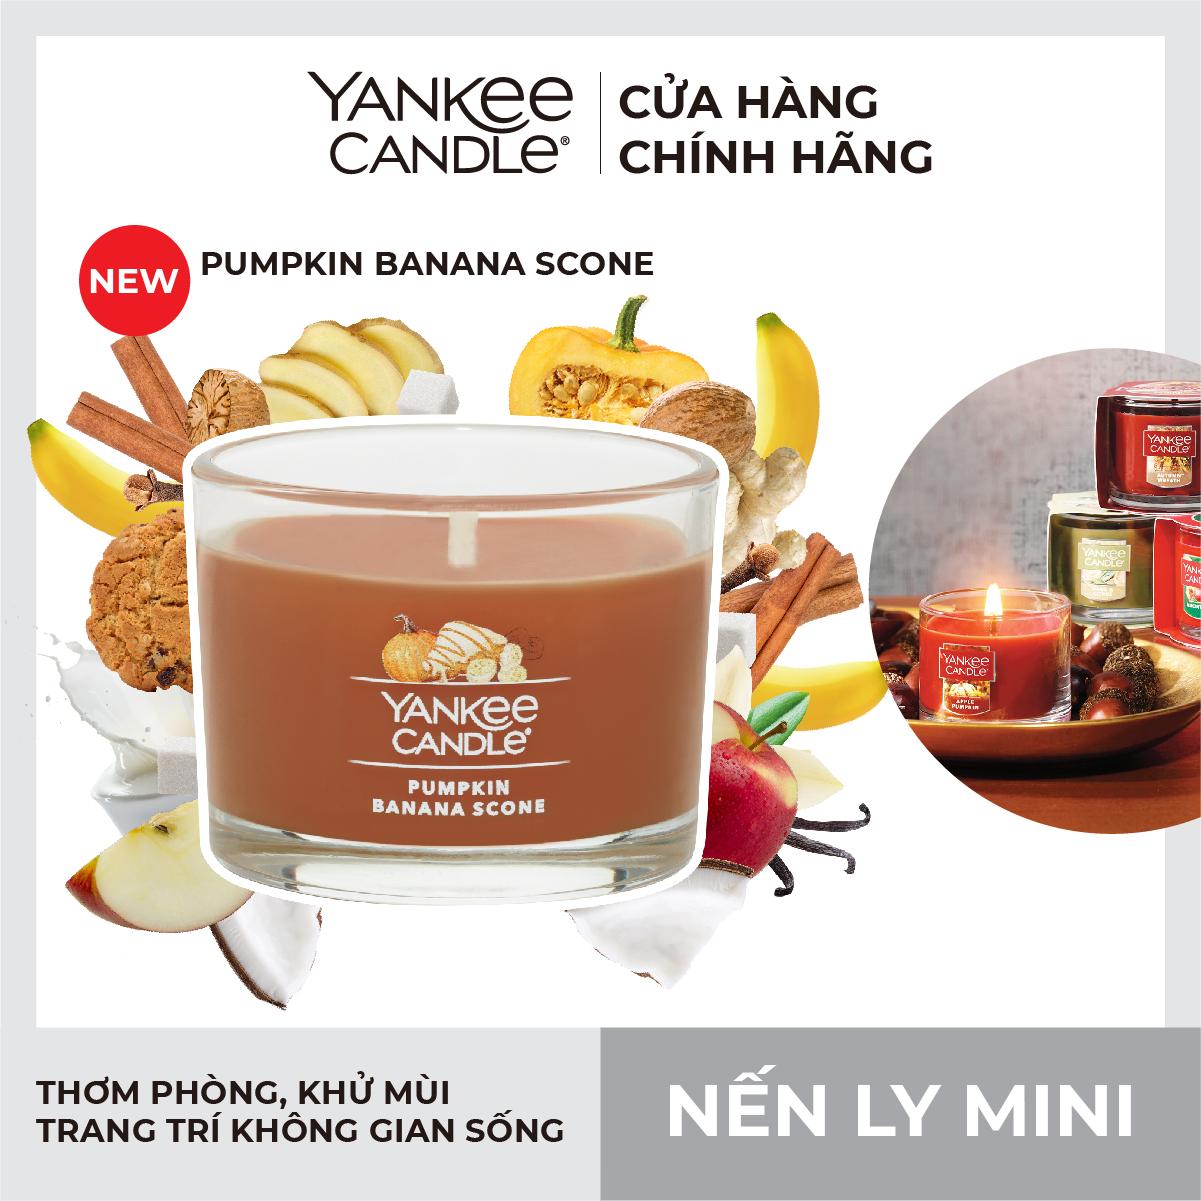 Nến ly mini Yankee Candle (37g) - Pumpkin Banana Scone